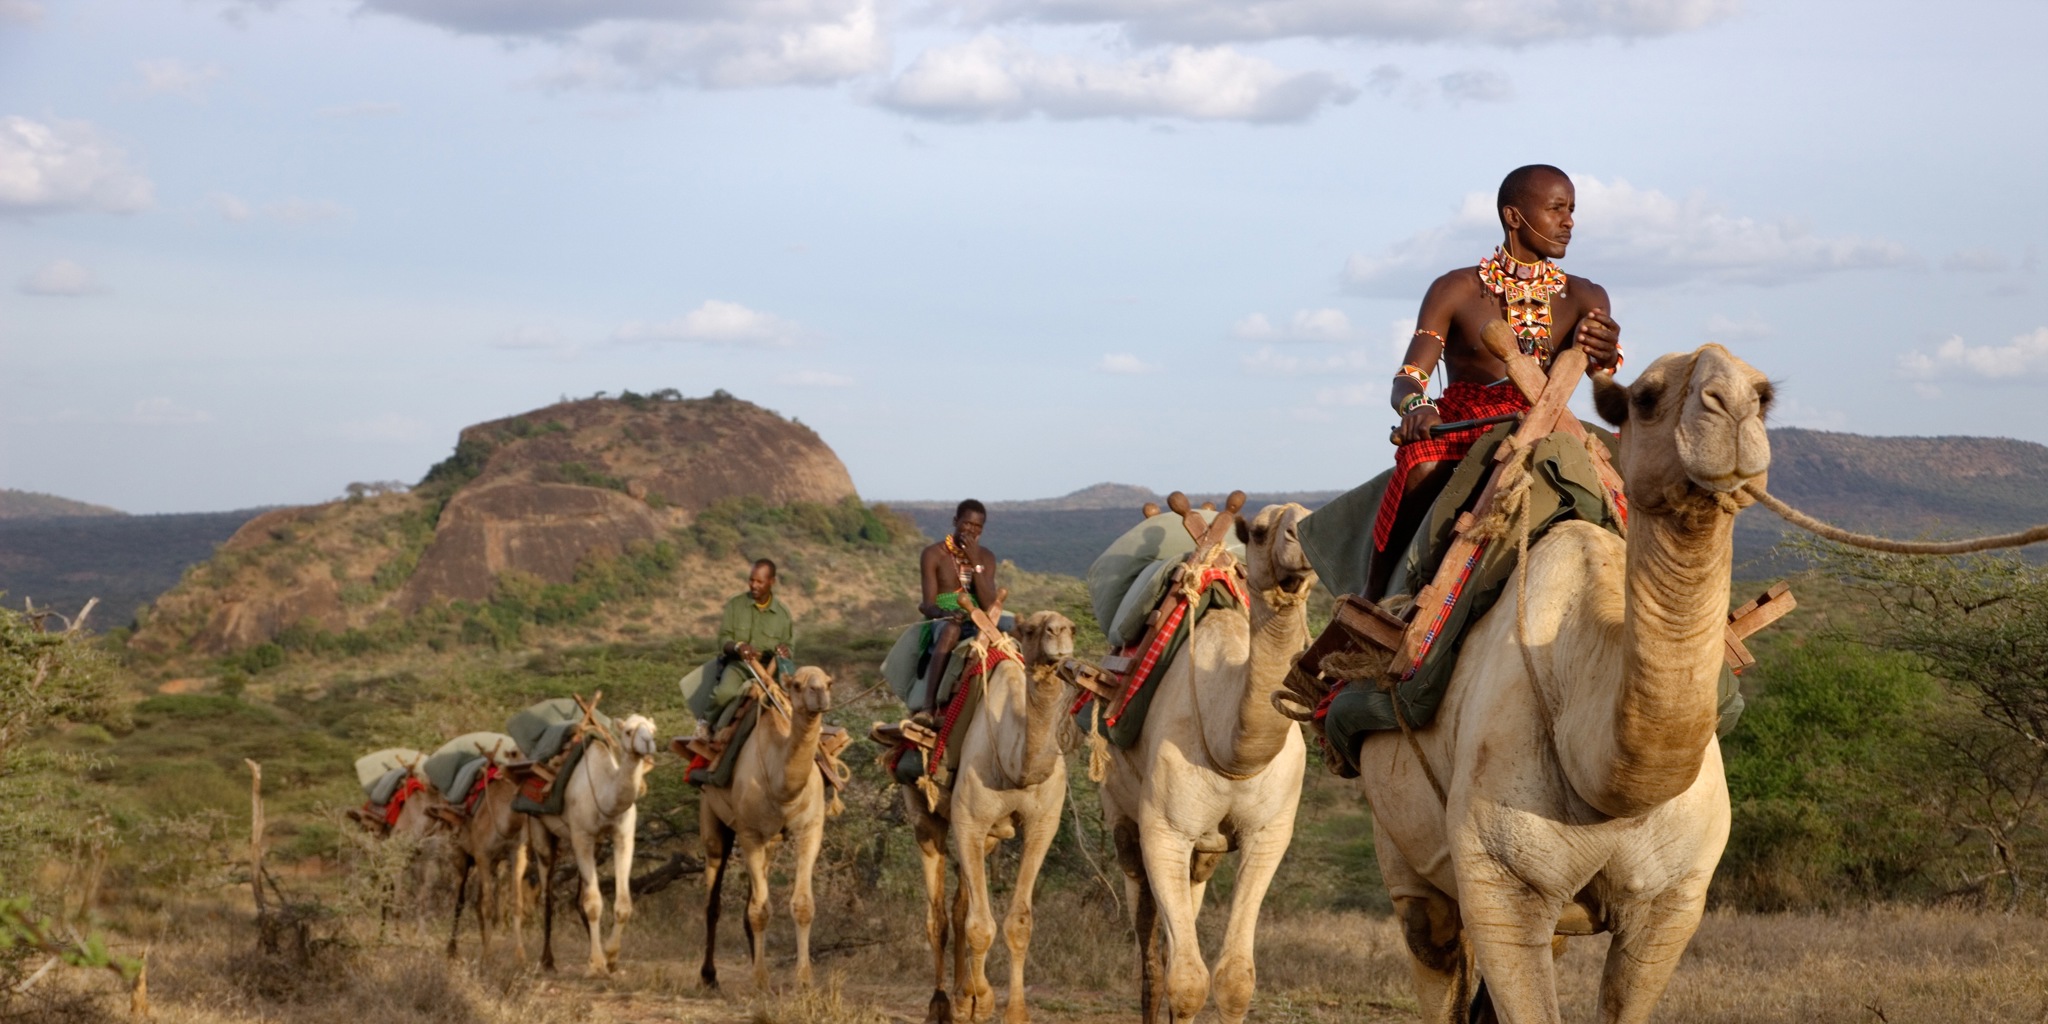 Camel ride safaris in Laikipia, Kenya vacations